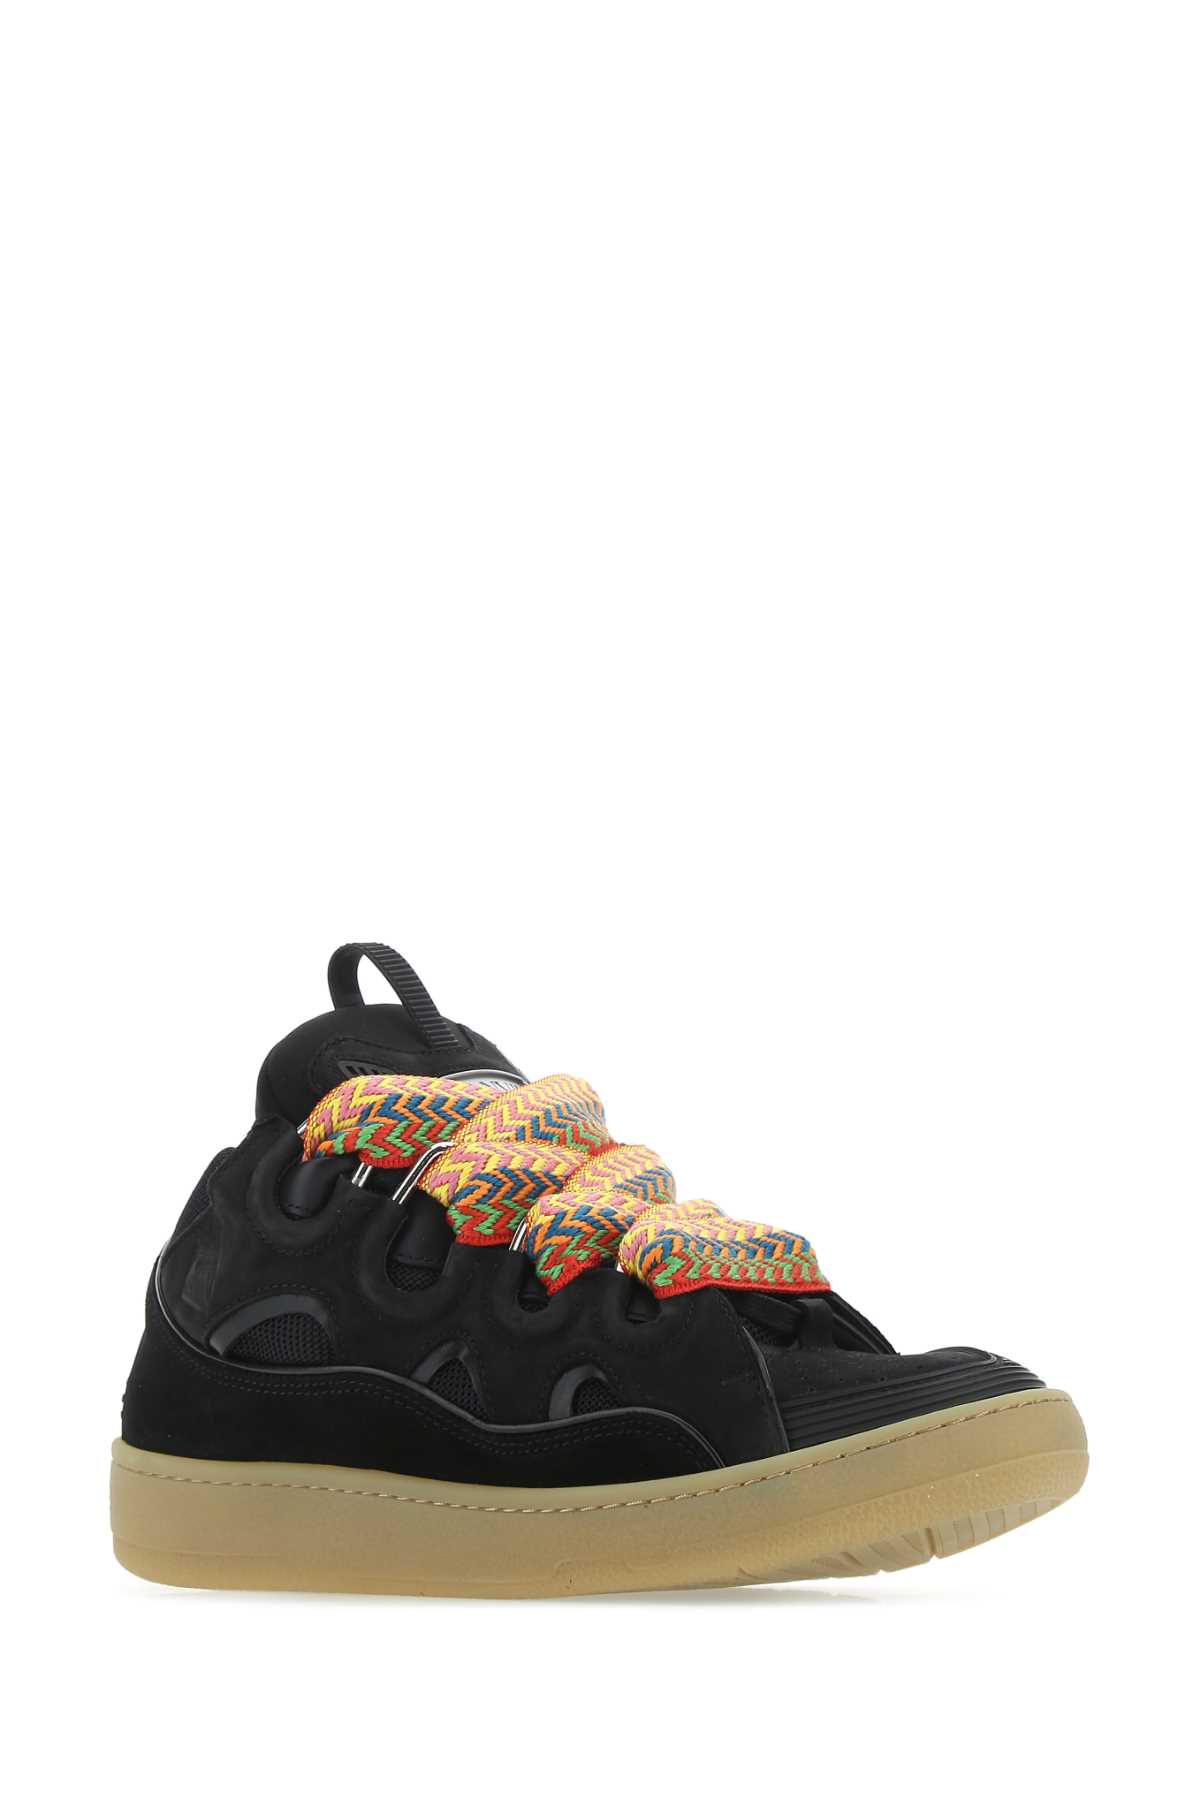 Lanvin Black Curb Sneakers In 10